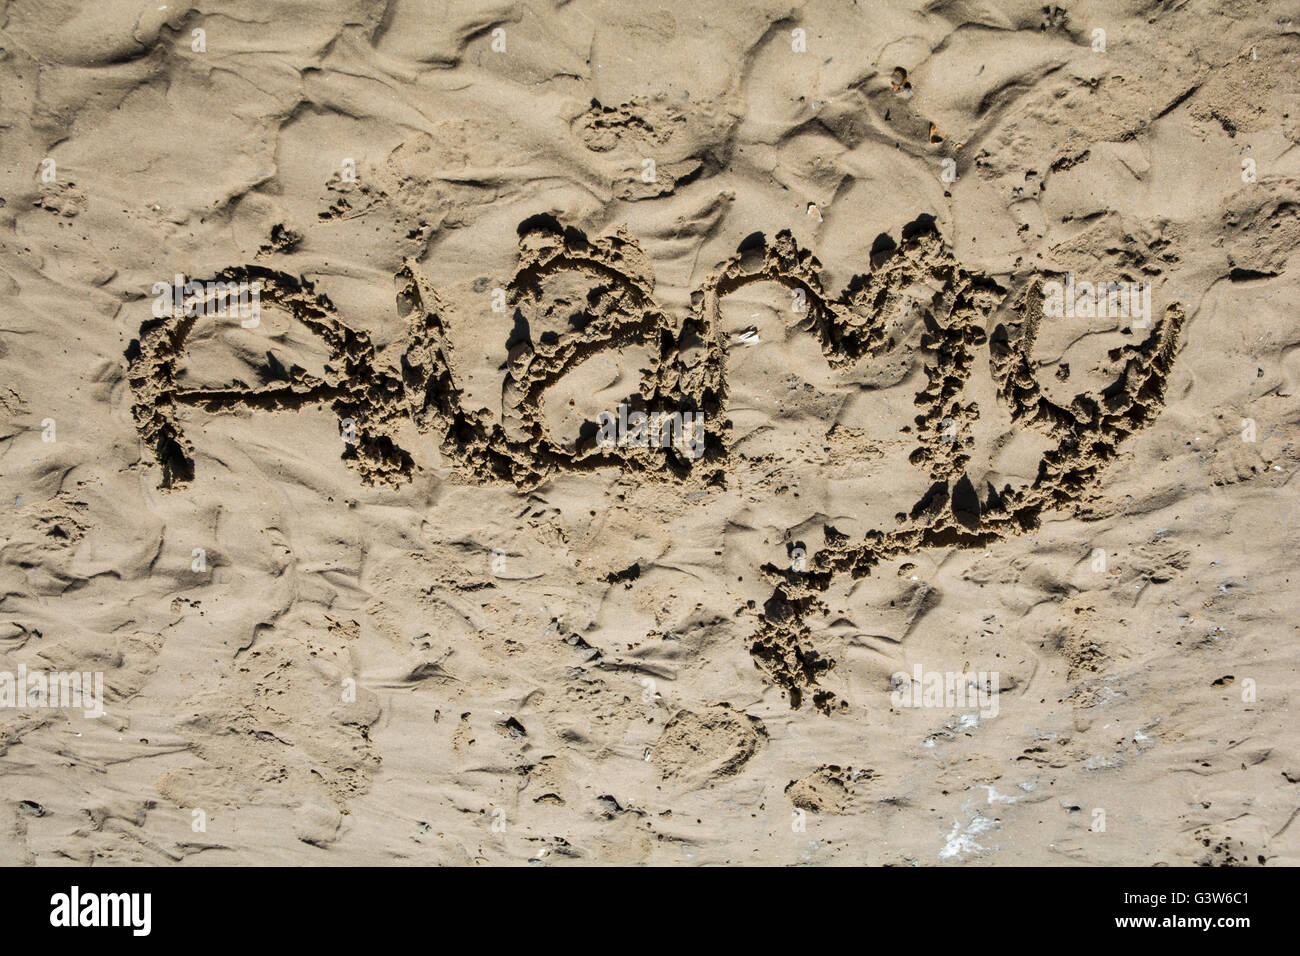 La palabra 'Alamy' dibujado en la arena. Foto de stock